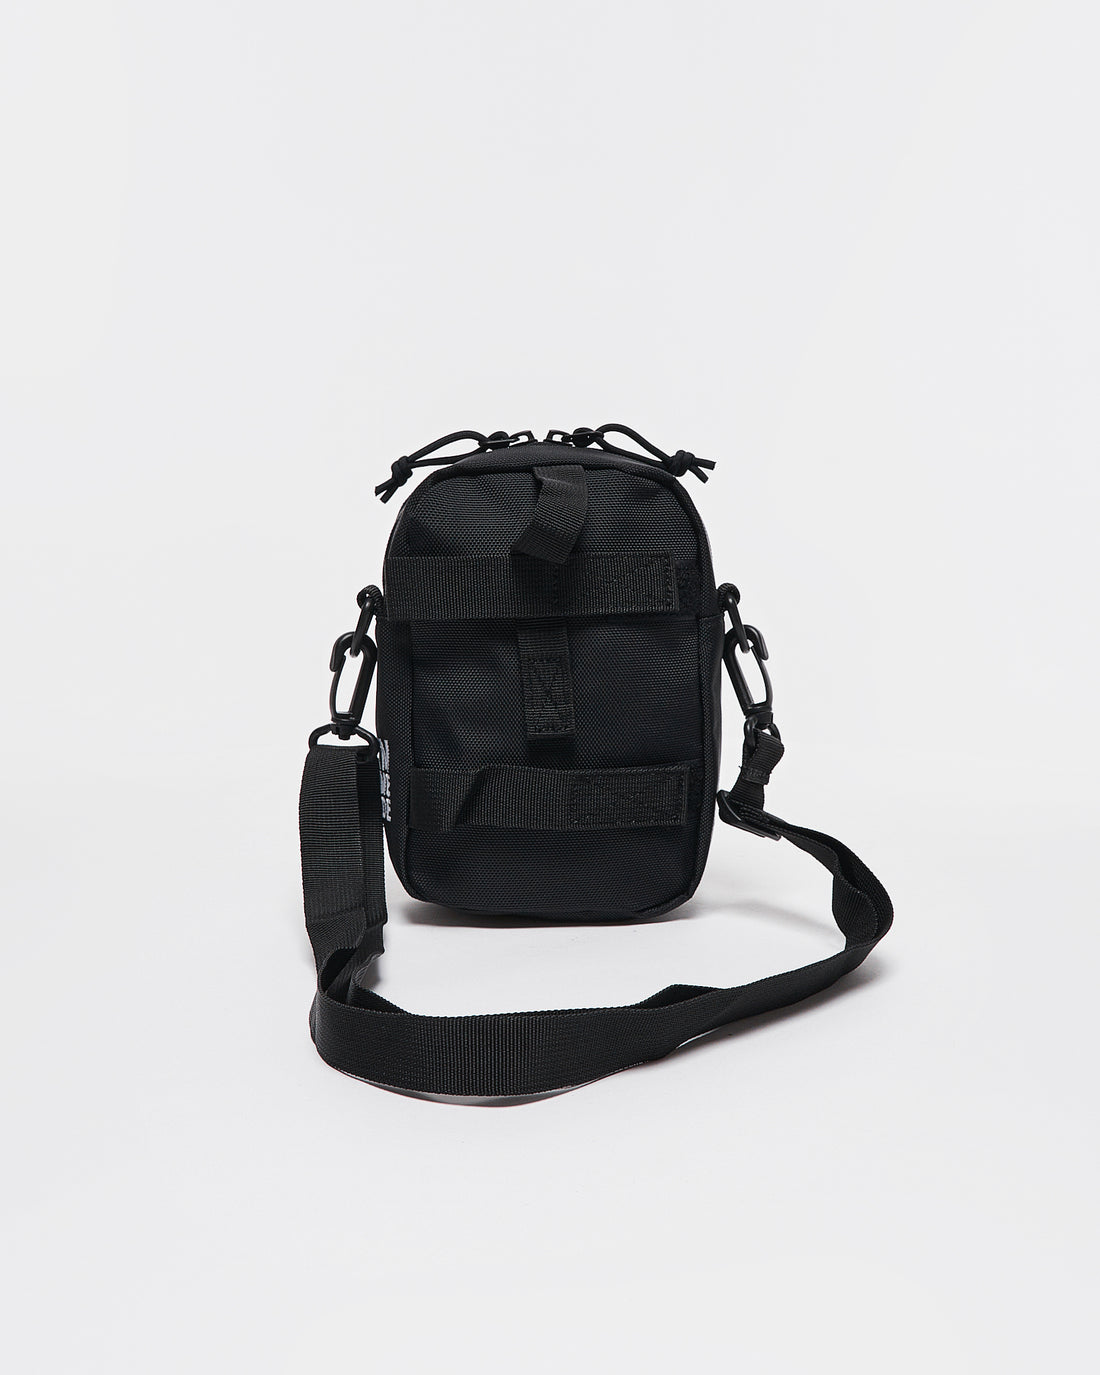 ADI Black  Sling Bag 15.90